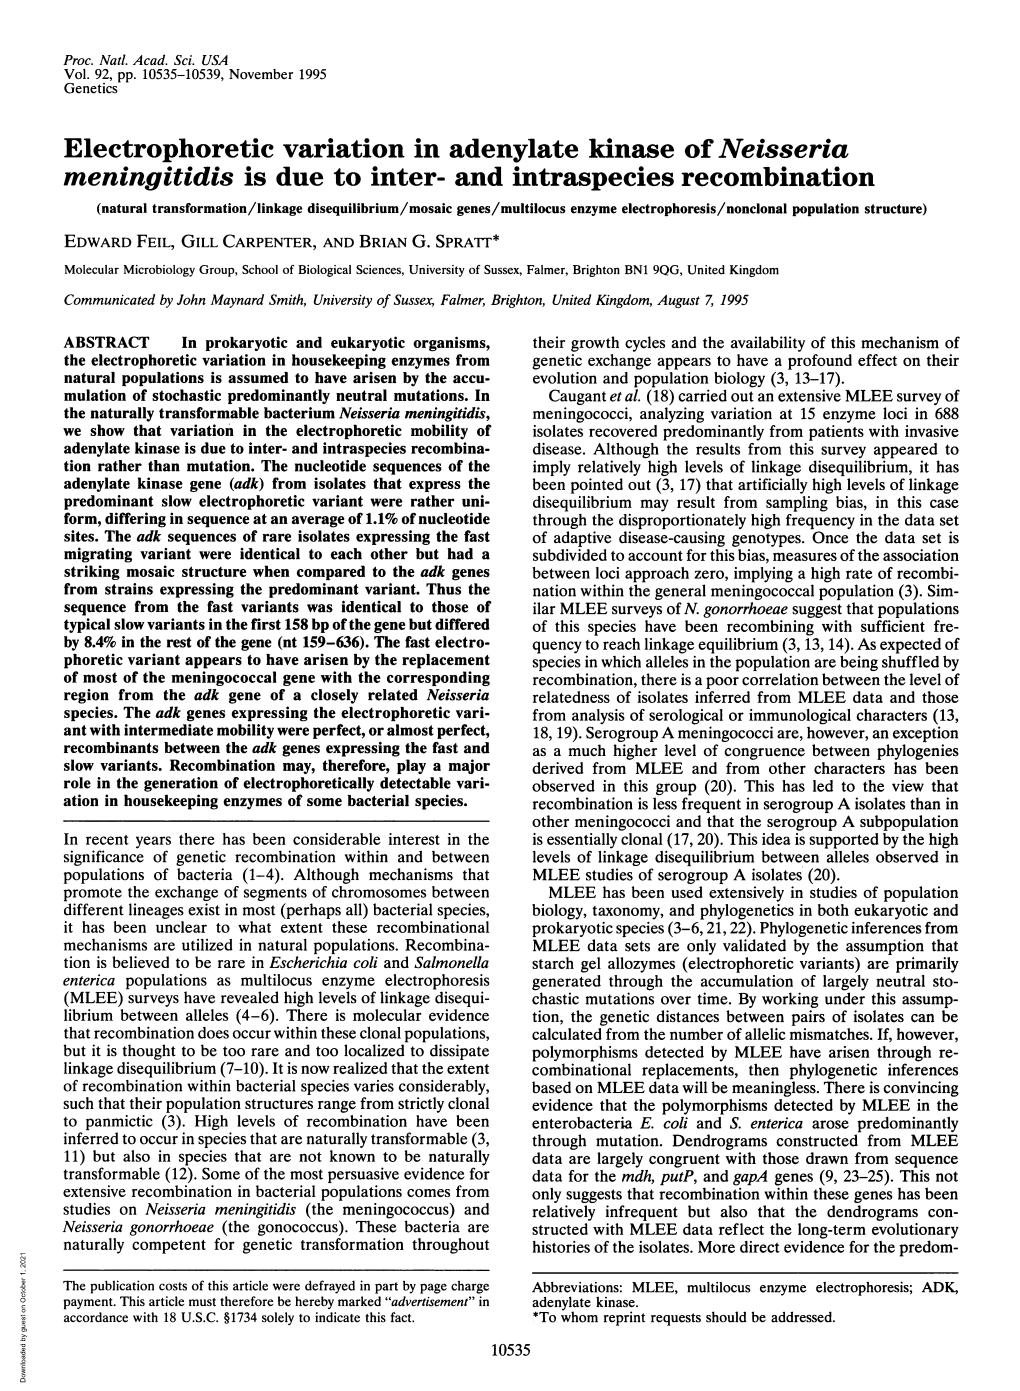 Electrophoretic Variation in Adenylate Kinase Ofneisseria